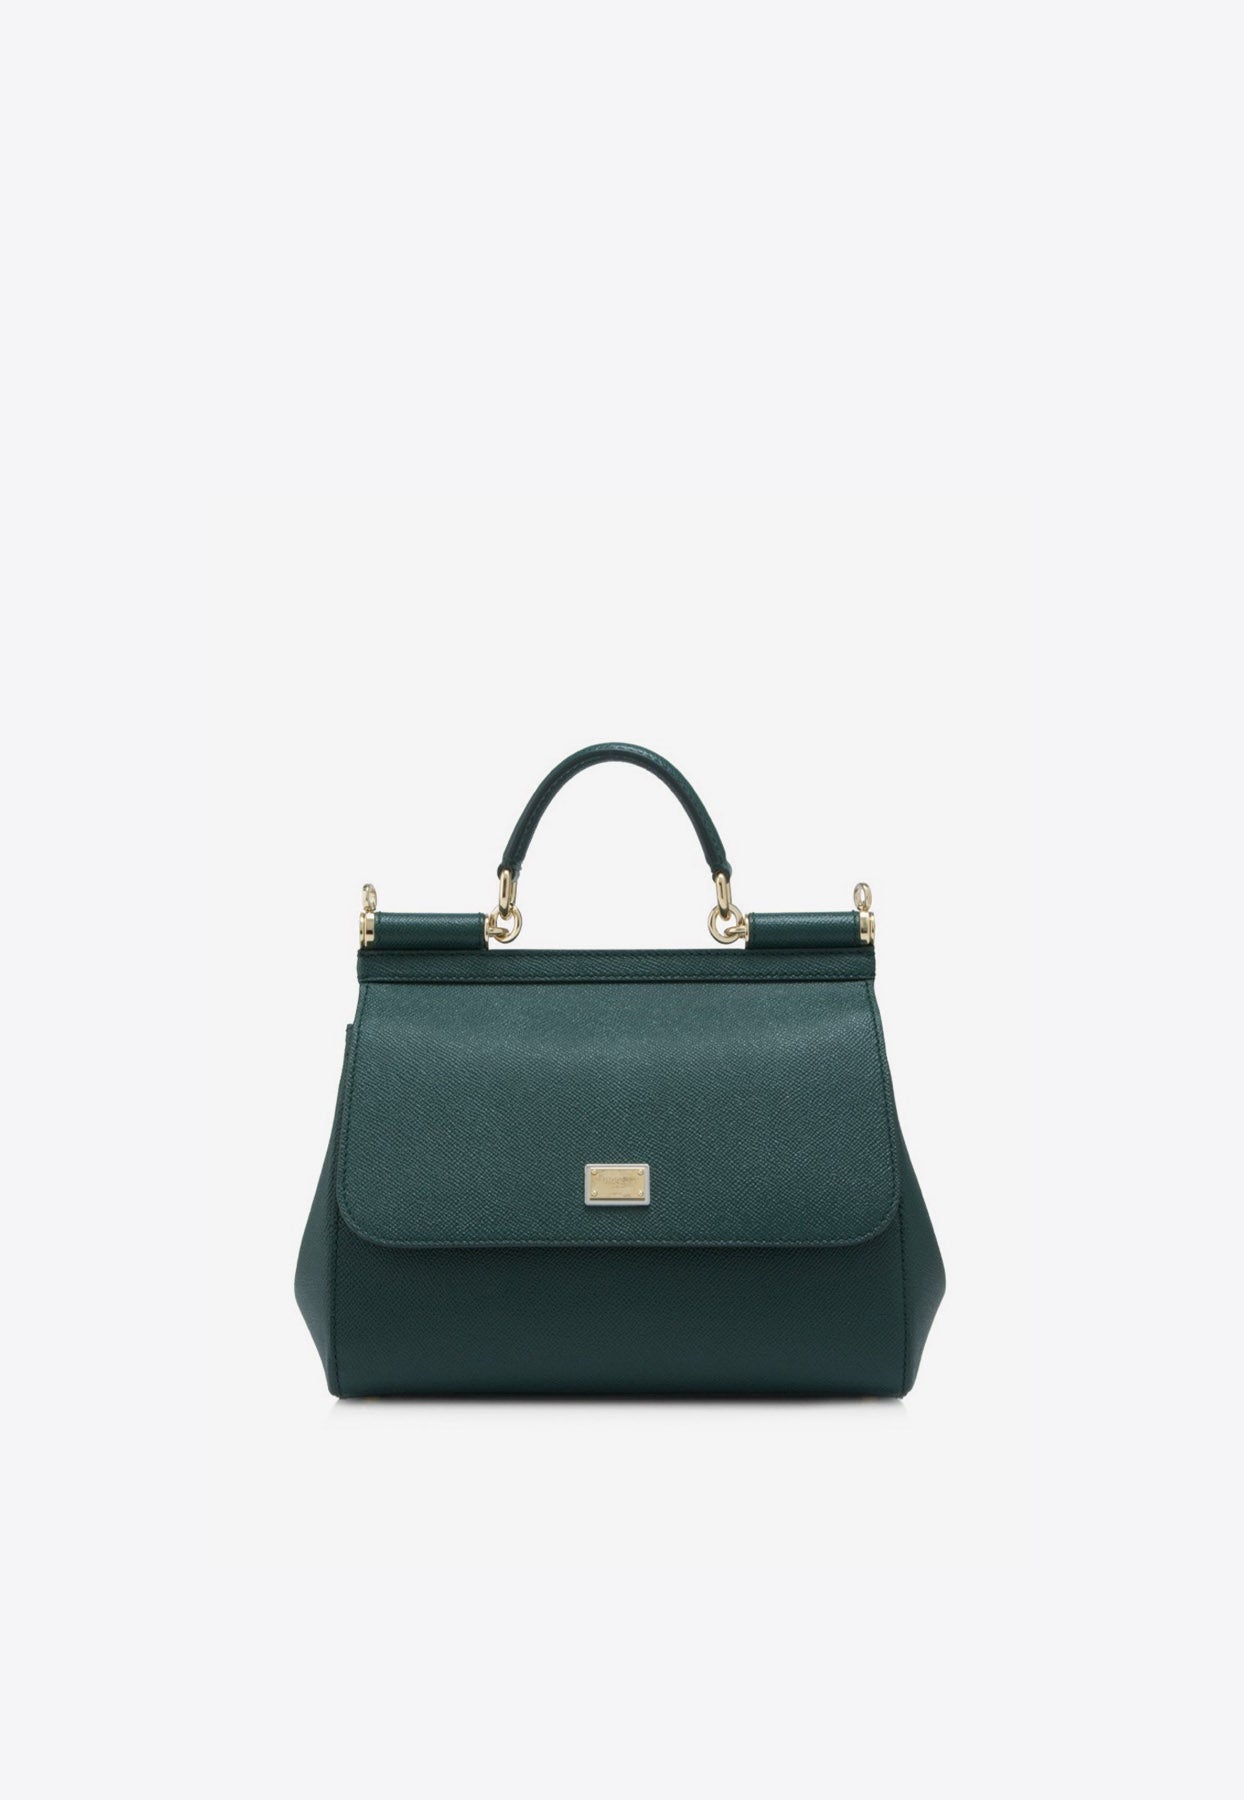 How To Get Designer Bags (YSL, Gucci, Prada) On Sale (Ft. Reebonz)